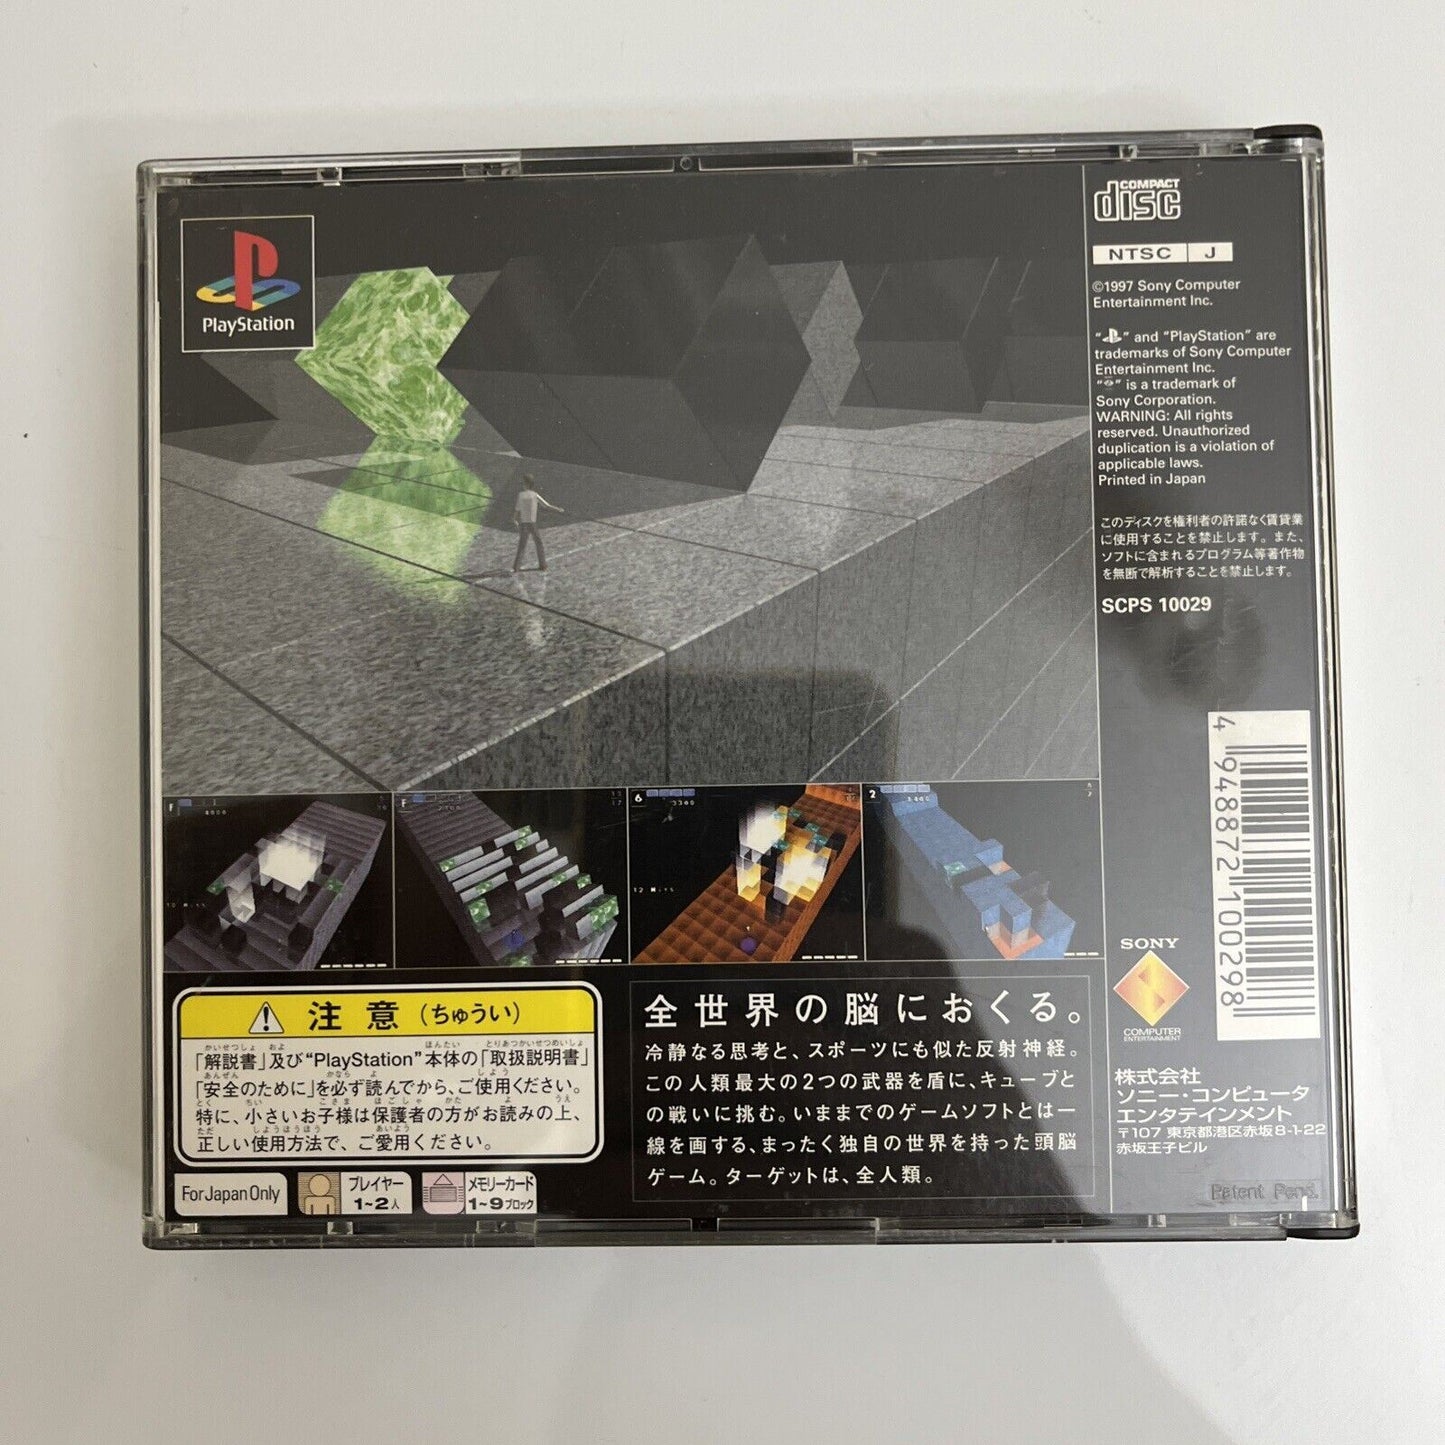 IQ: Intelligent Qube - Sony PlayStation PS1 NTSC-J JAPAN Puzzle 1997 Game